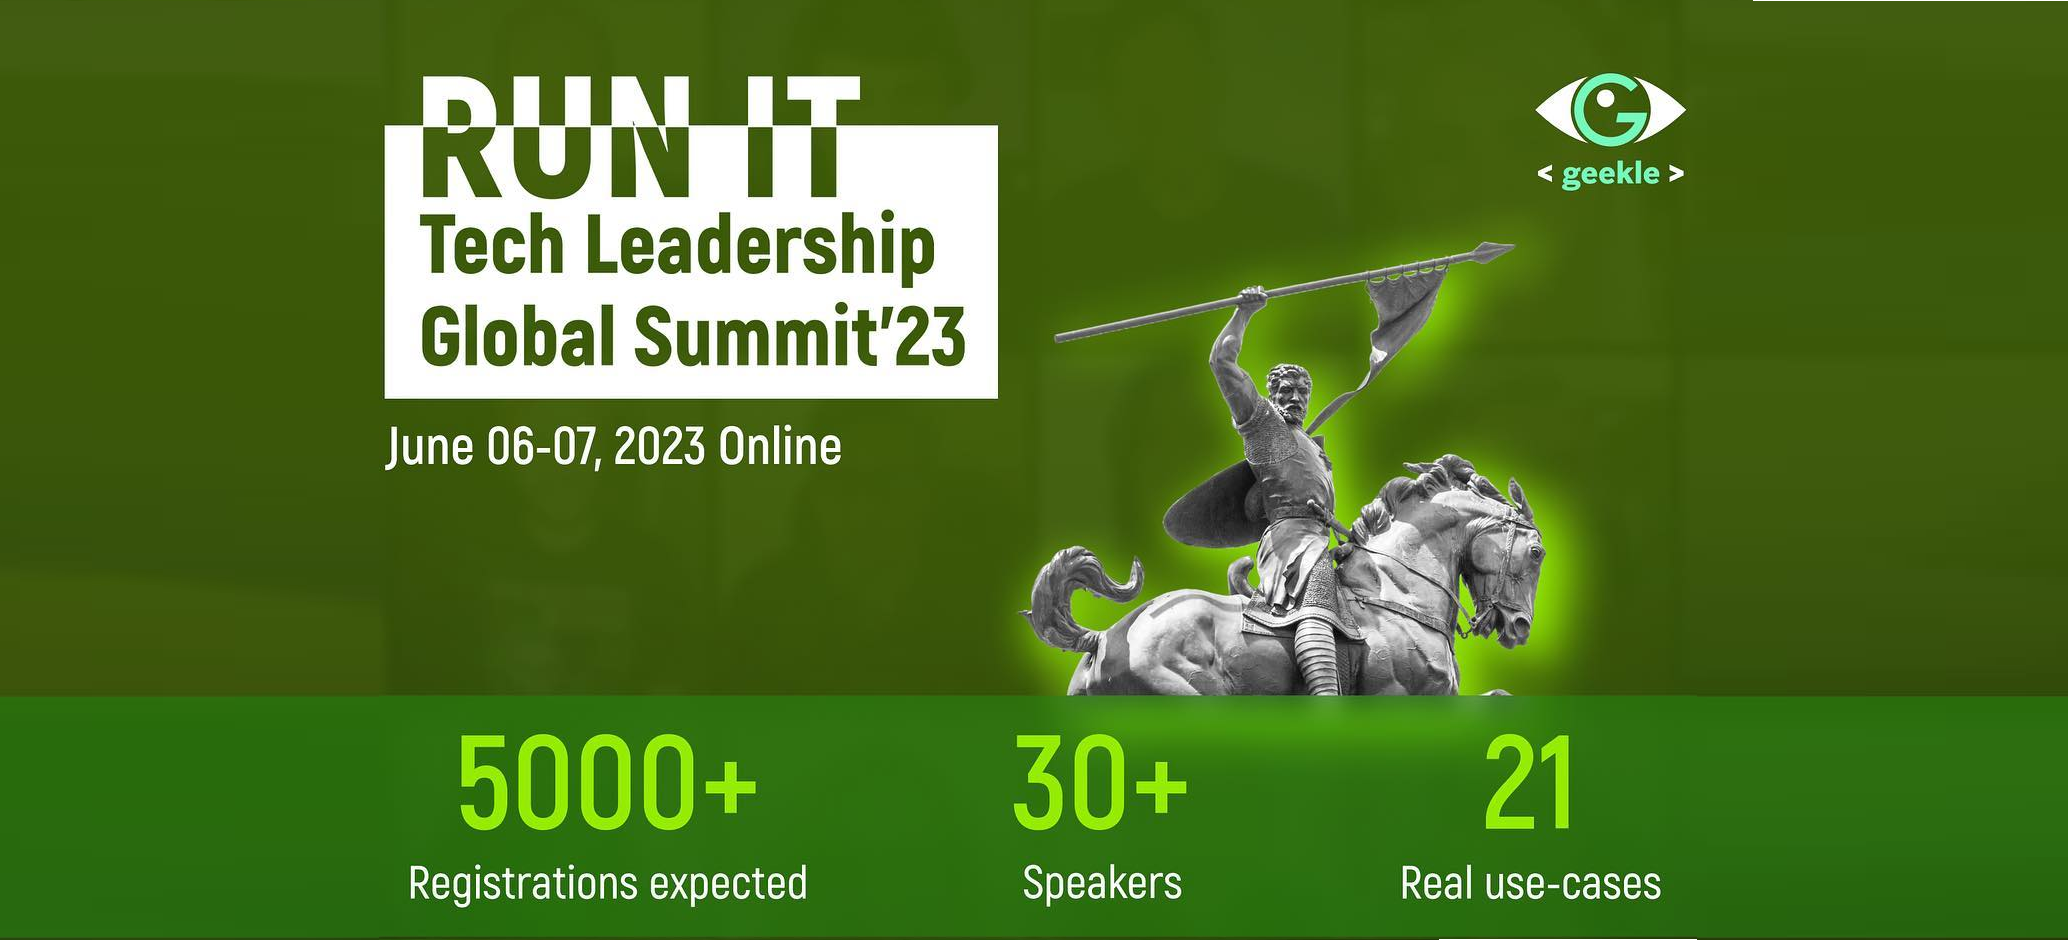 Tech Leadership Global Summit 23